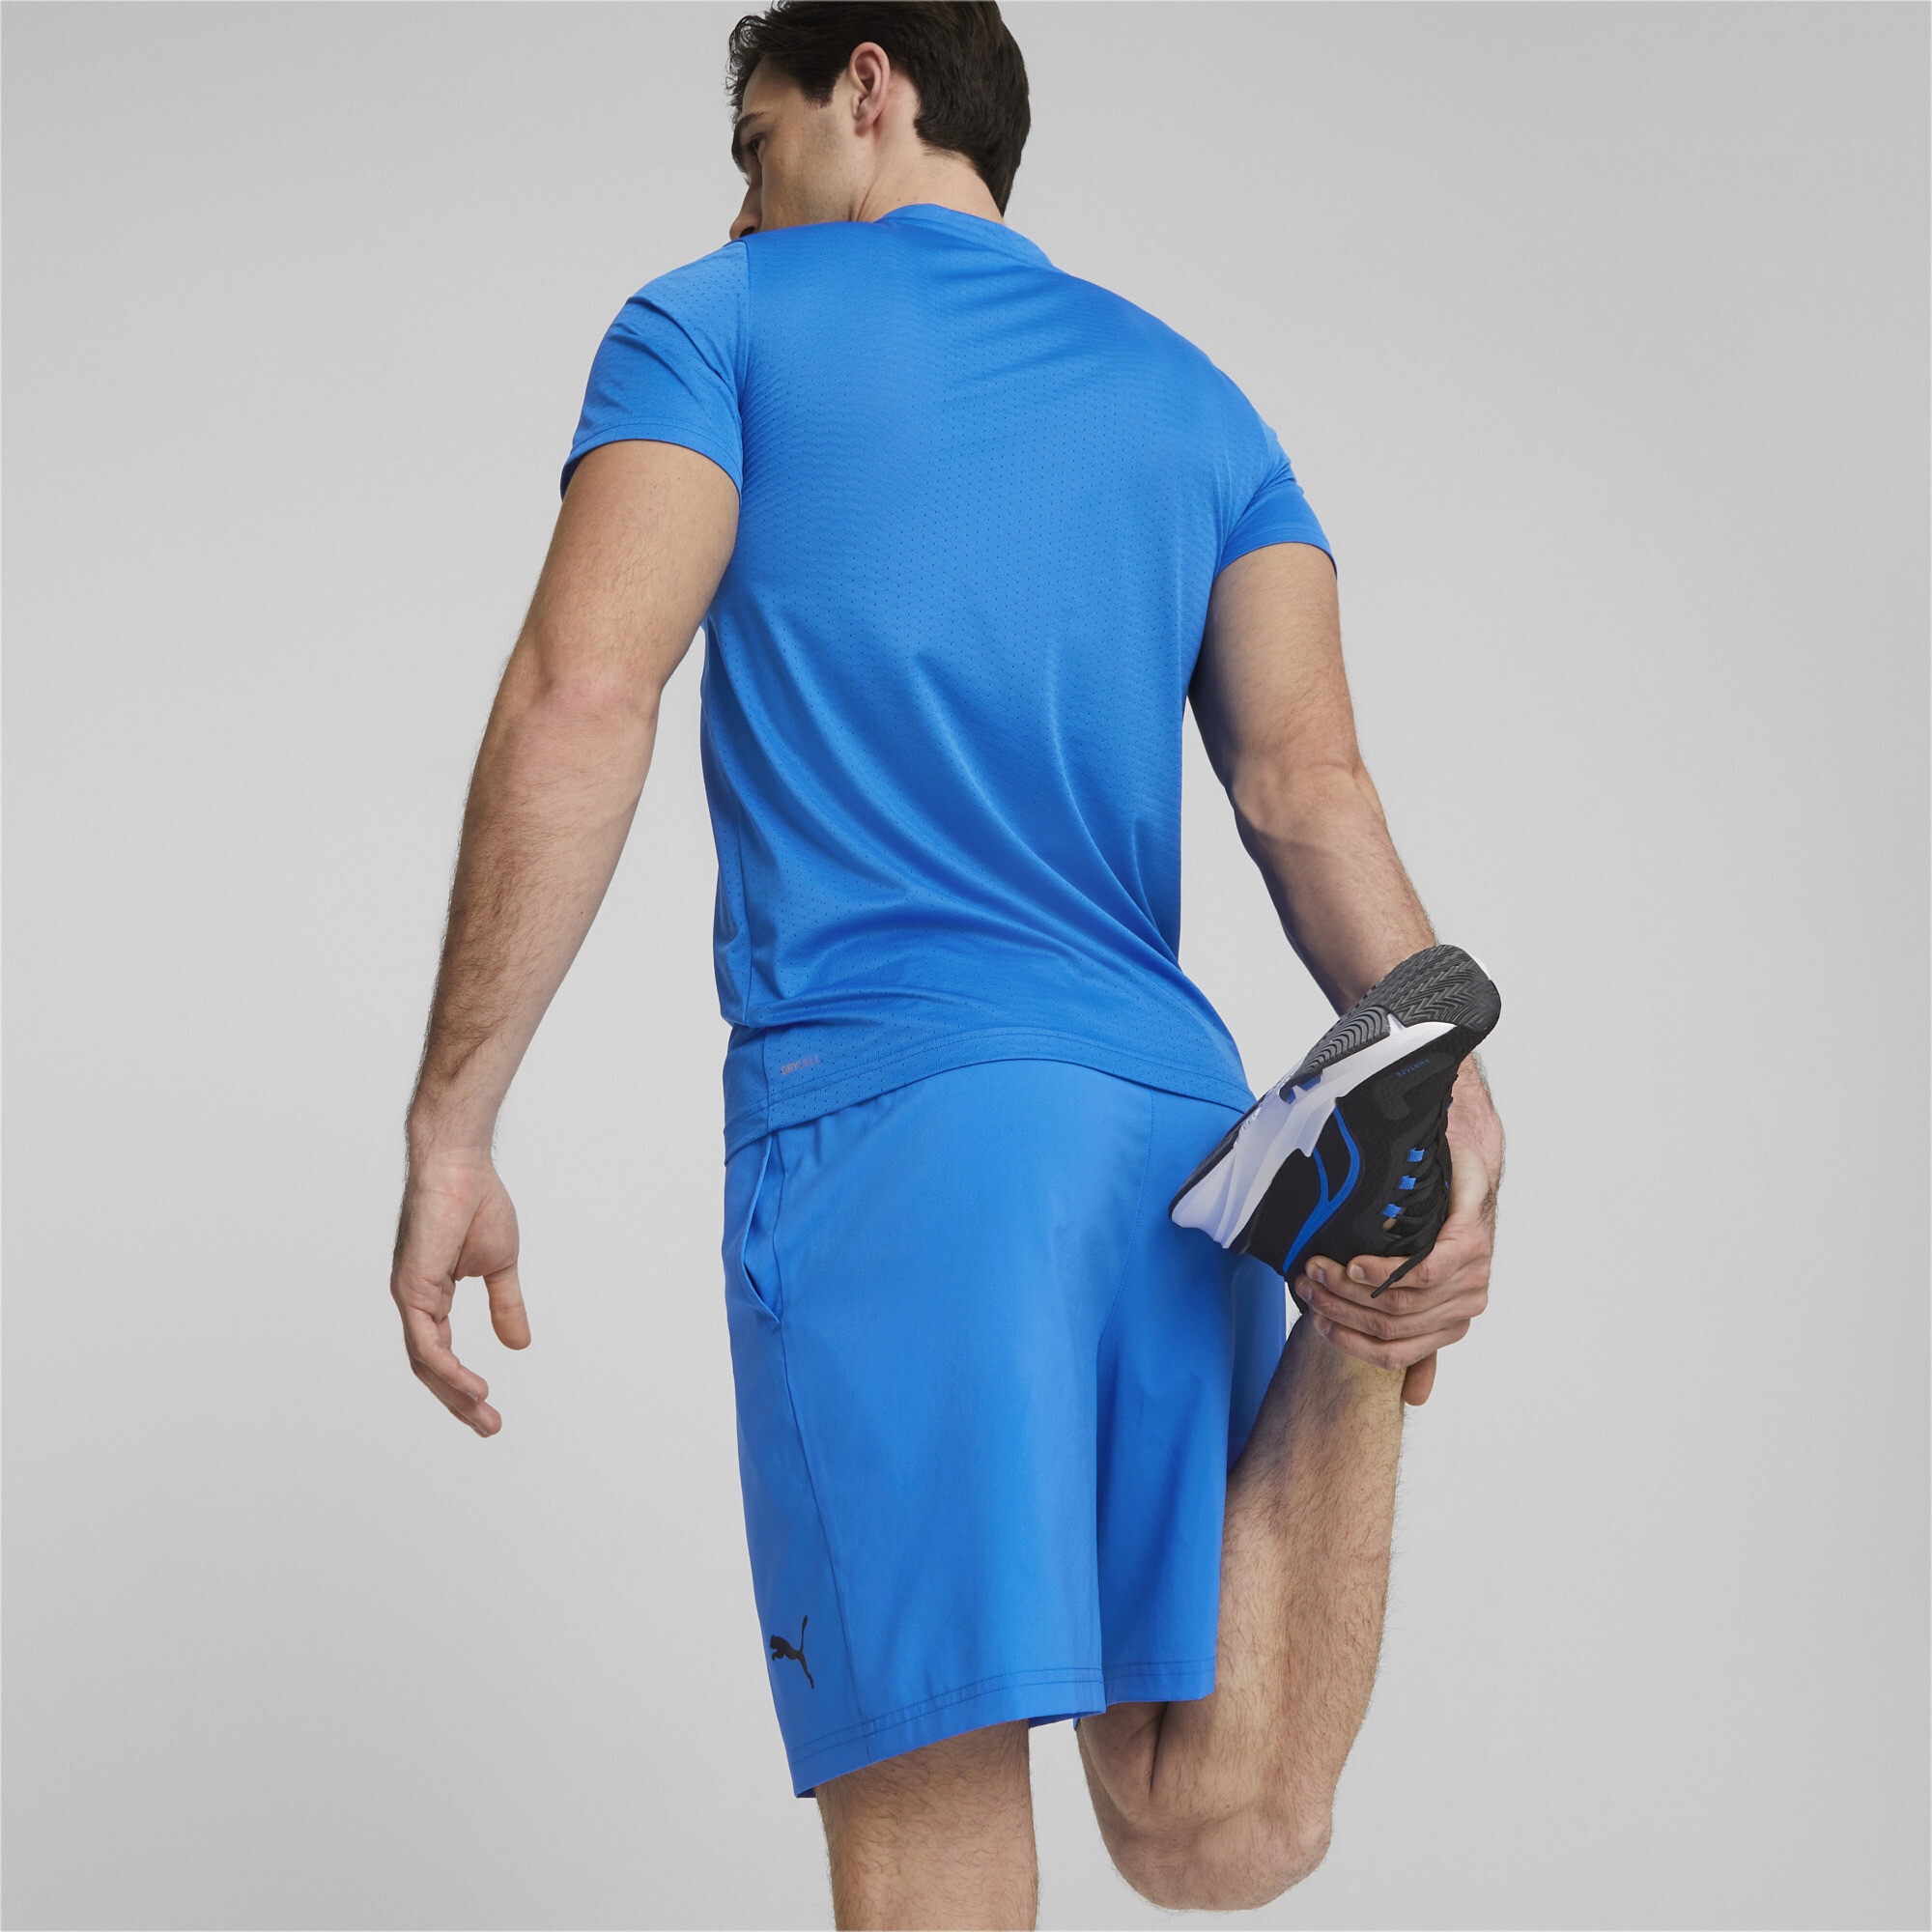 Men's Puma Favourite Blaster Training T-Shirt, Blue, Size XL, Clothing